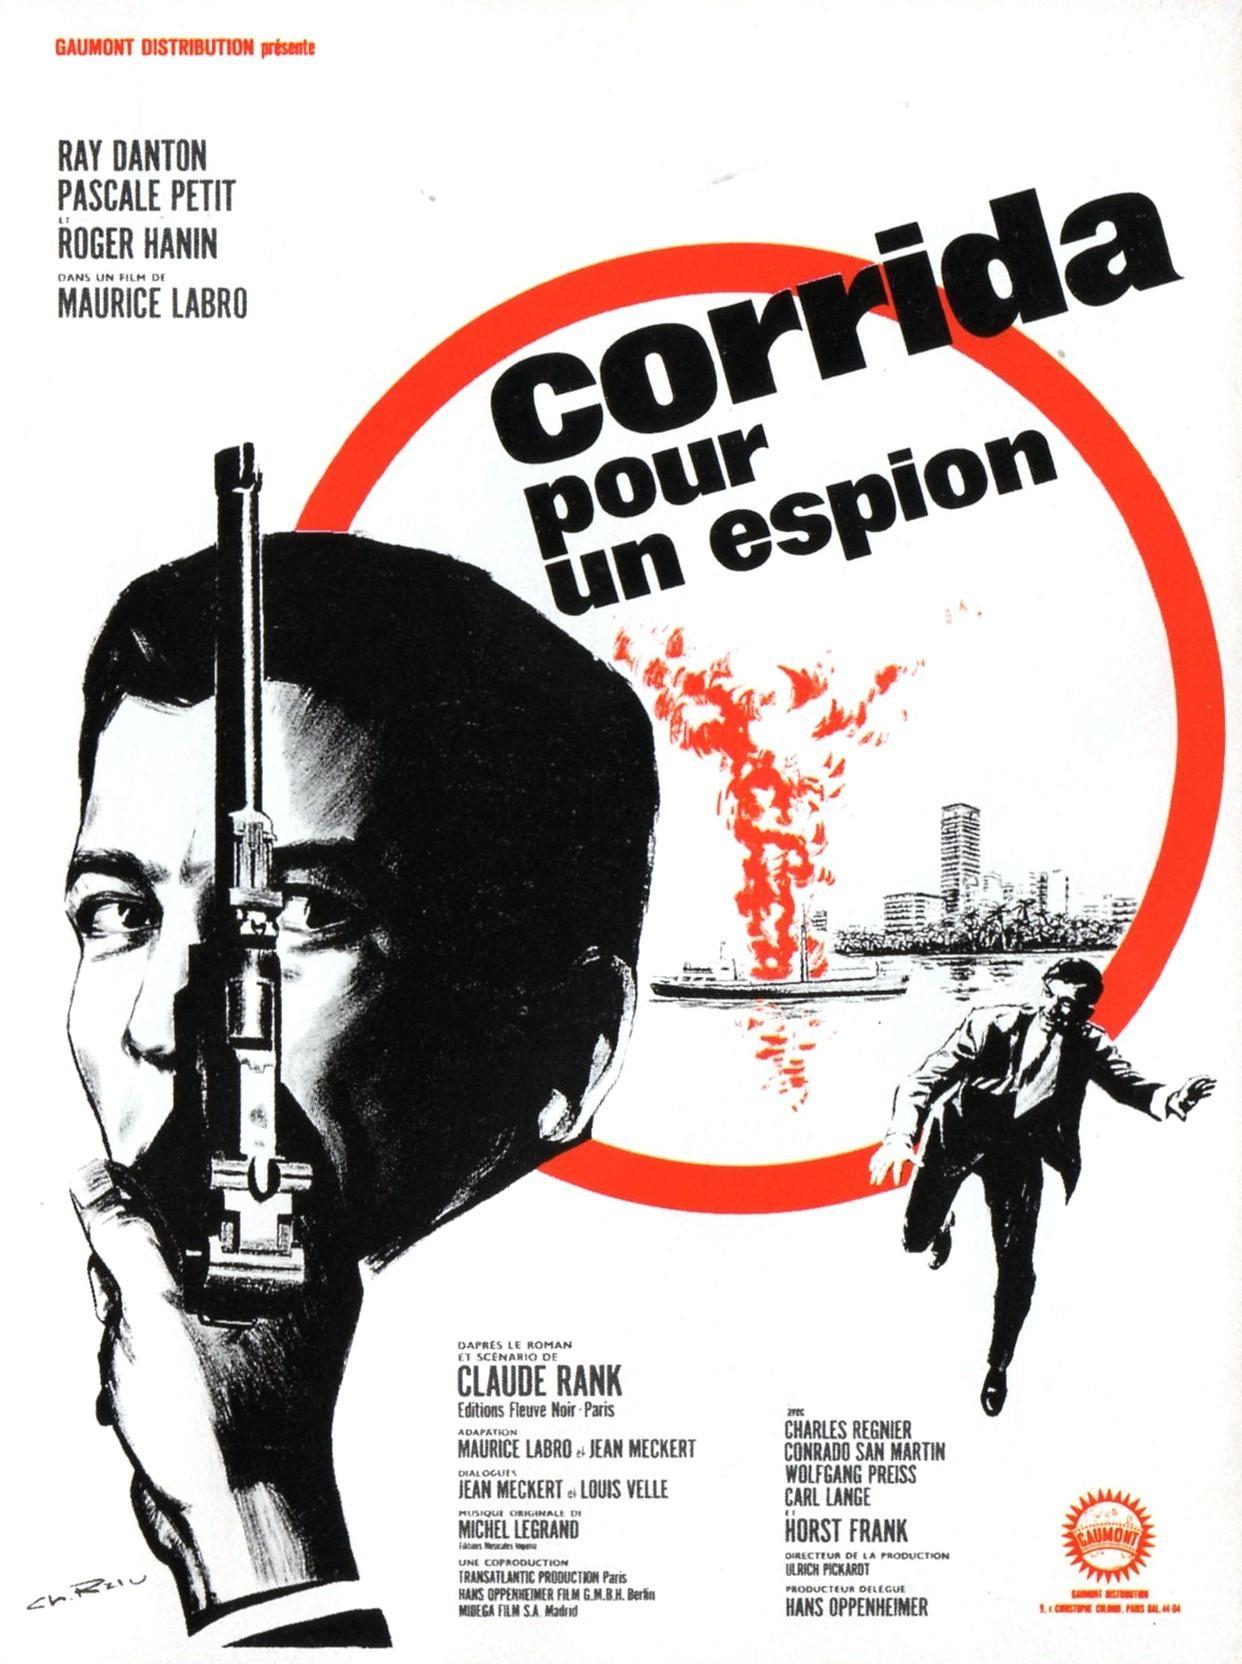 Постер фильма Corrida pour un espion